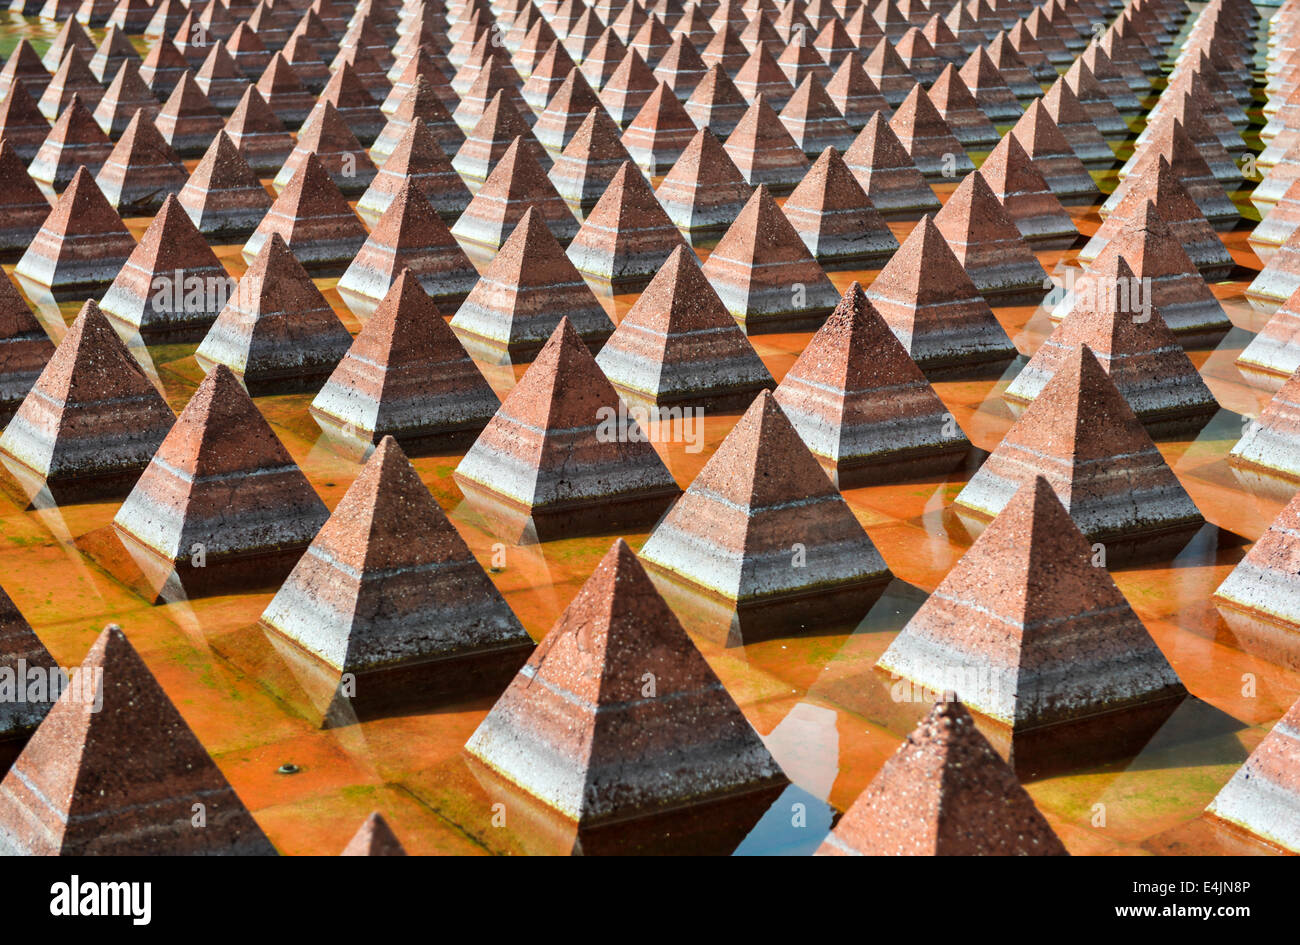 Plaza Juarez, Mexico City, Mexico. A set of 1034 reddish pyramids in a broad pool in Plaza Juarez. Stock Photo